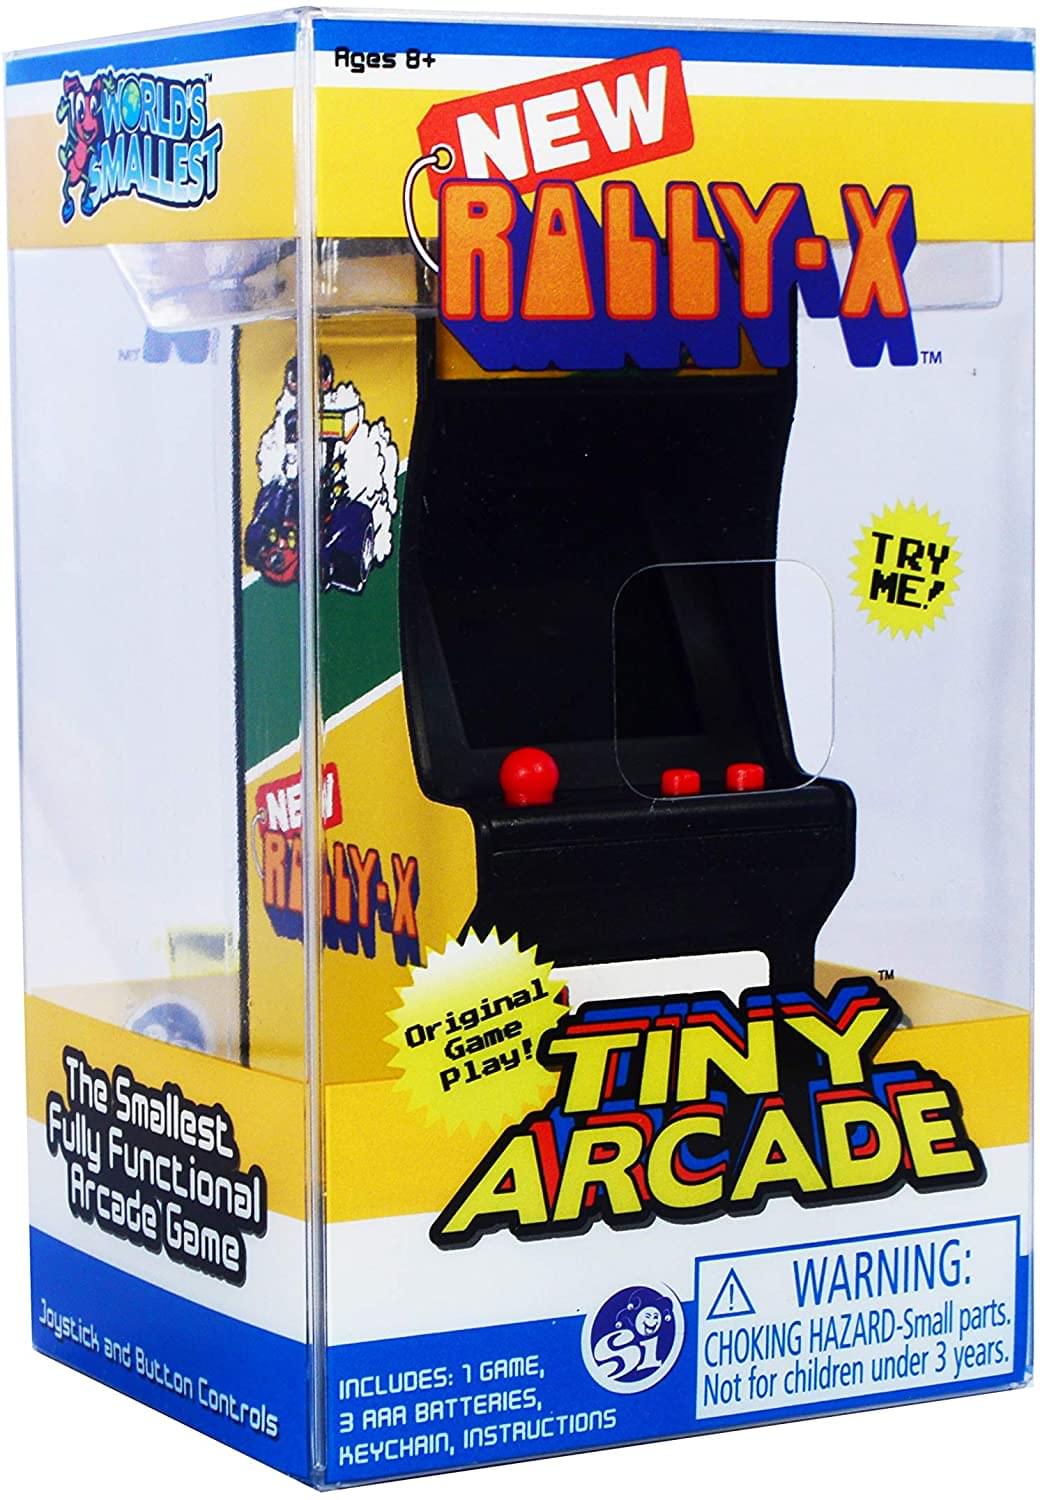 rally x arcade game